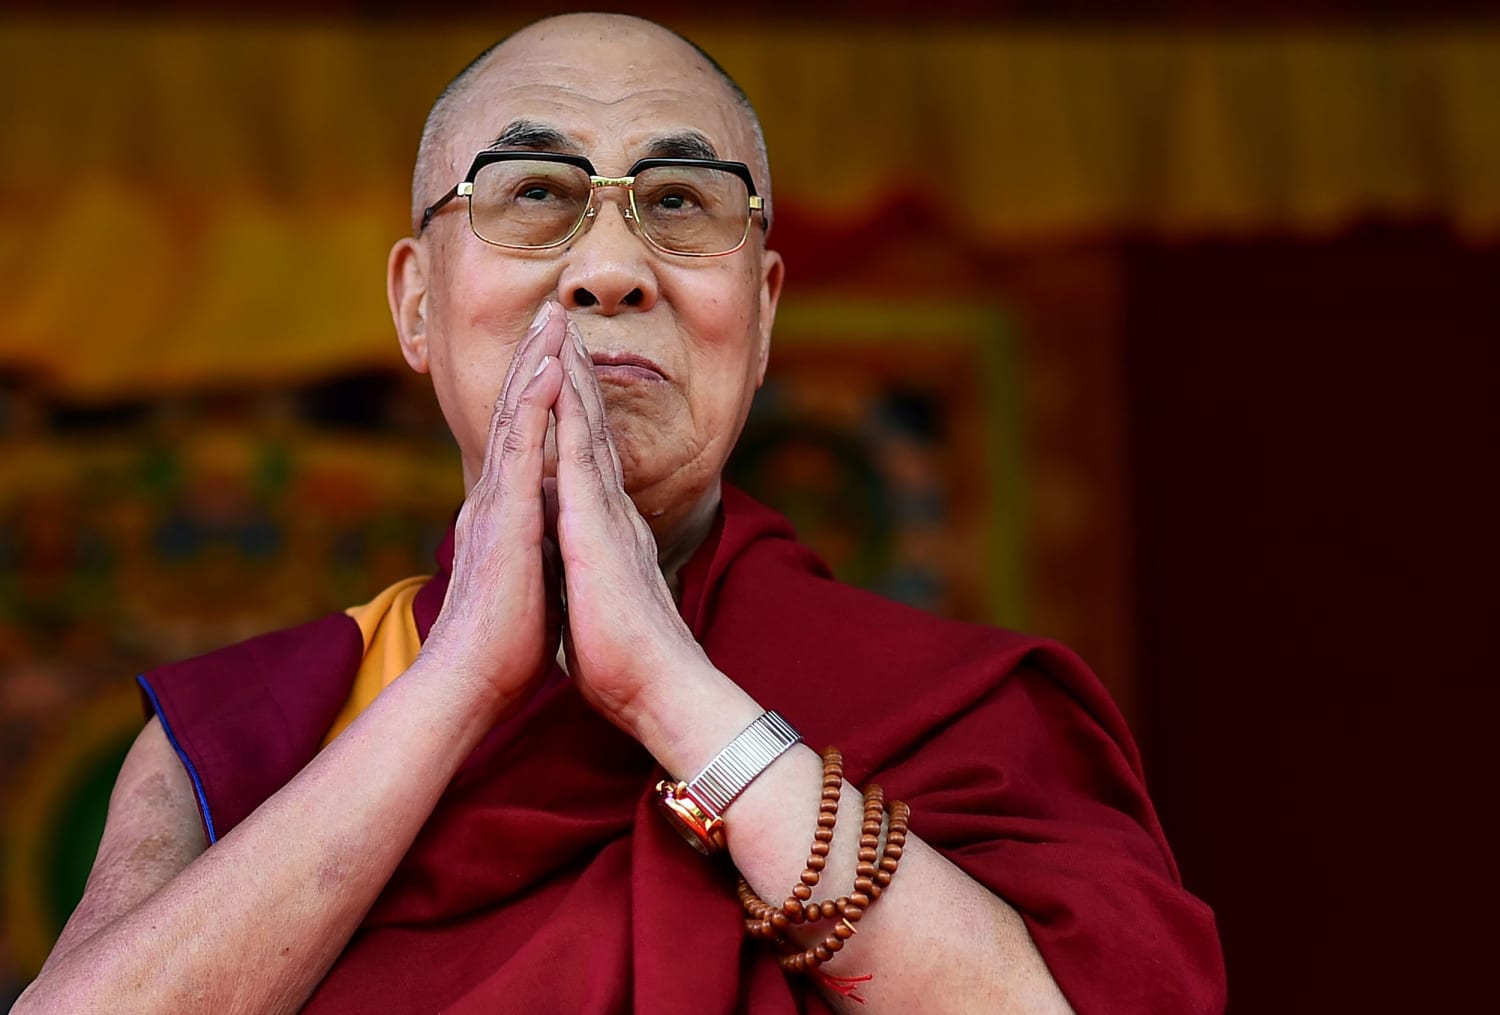 Dalai Lama apologizes after video shows him asking boy to ‘suck my tongue’